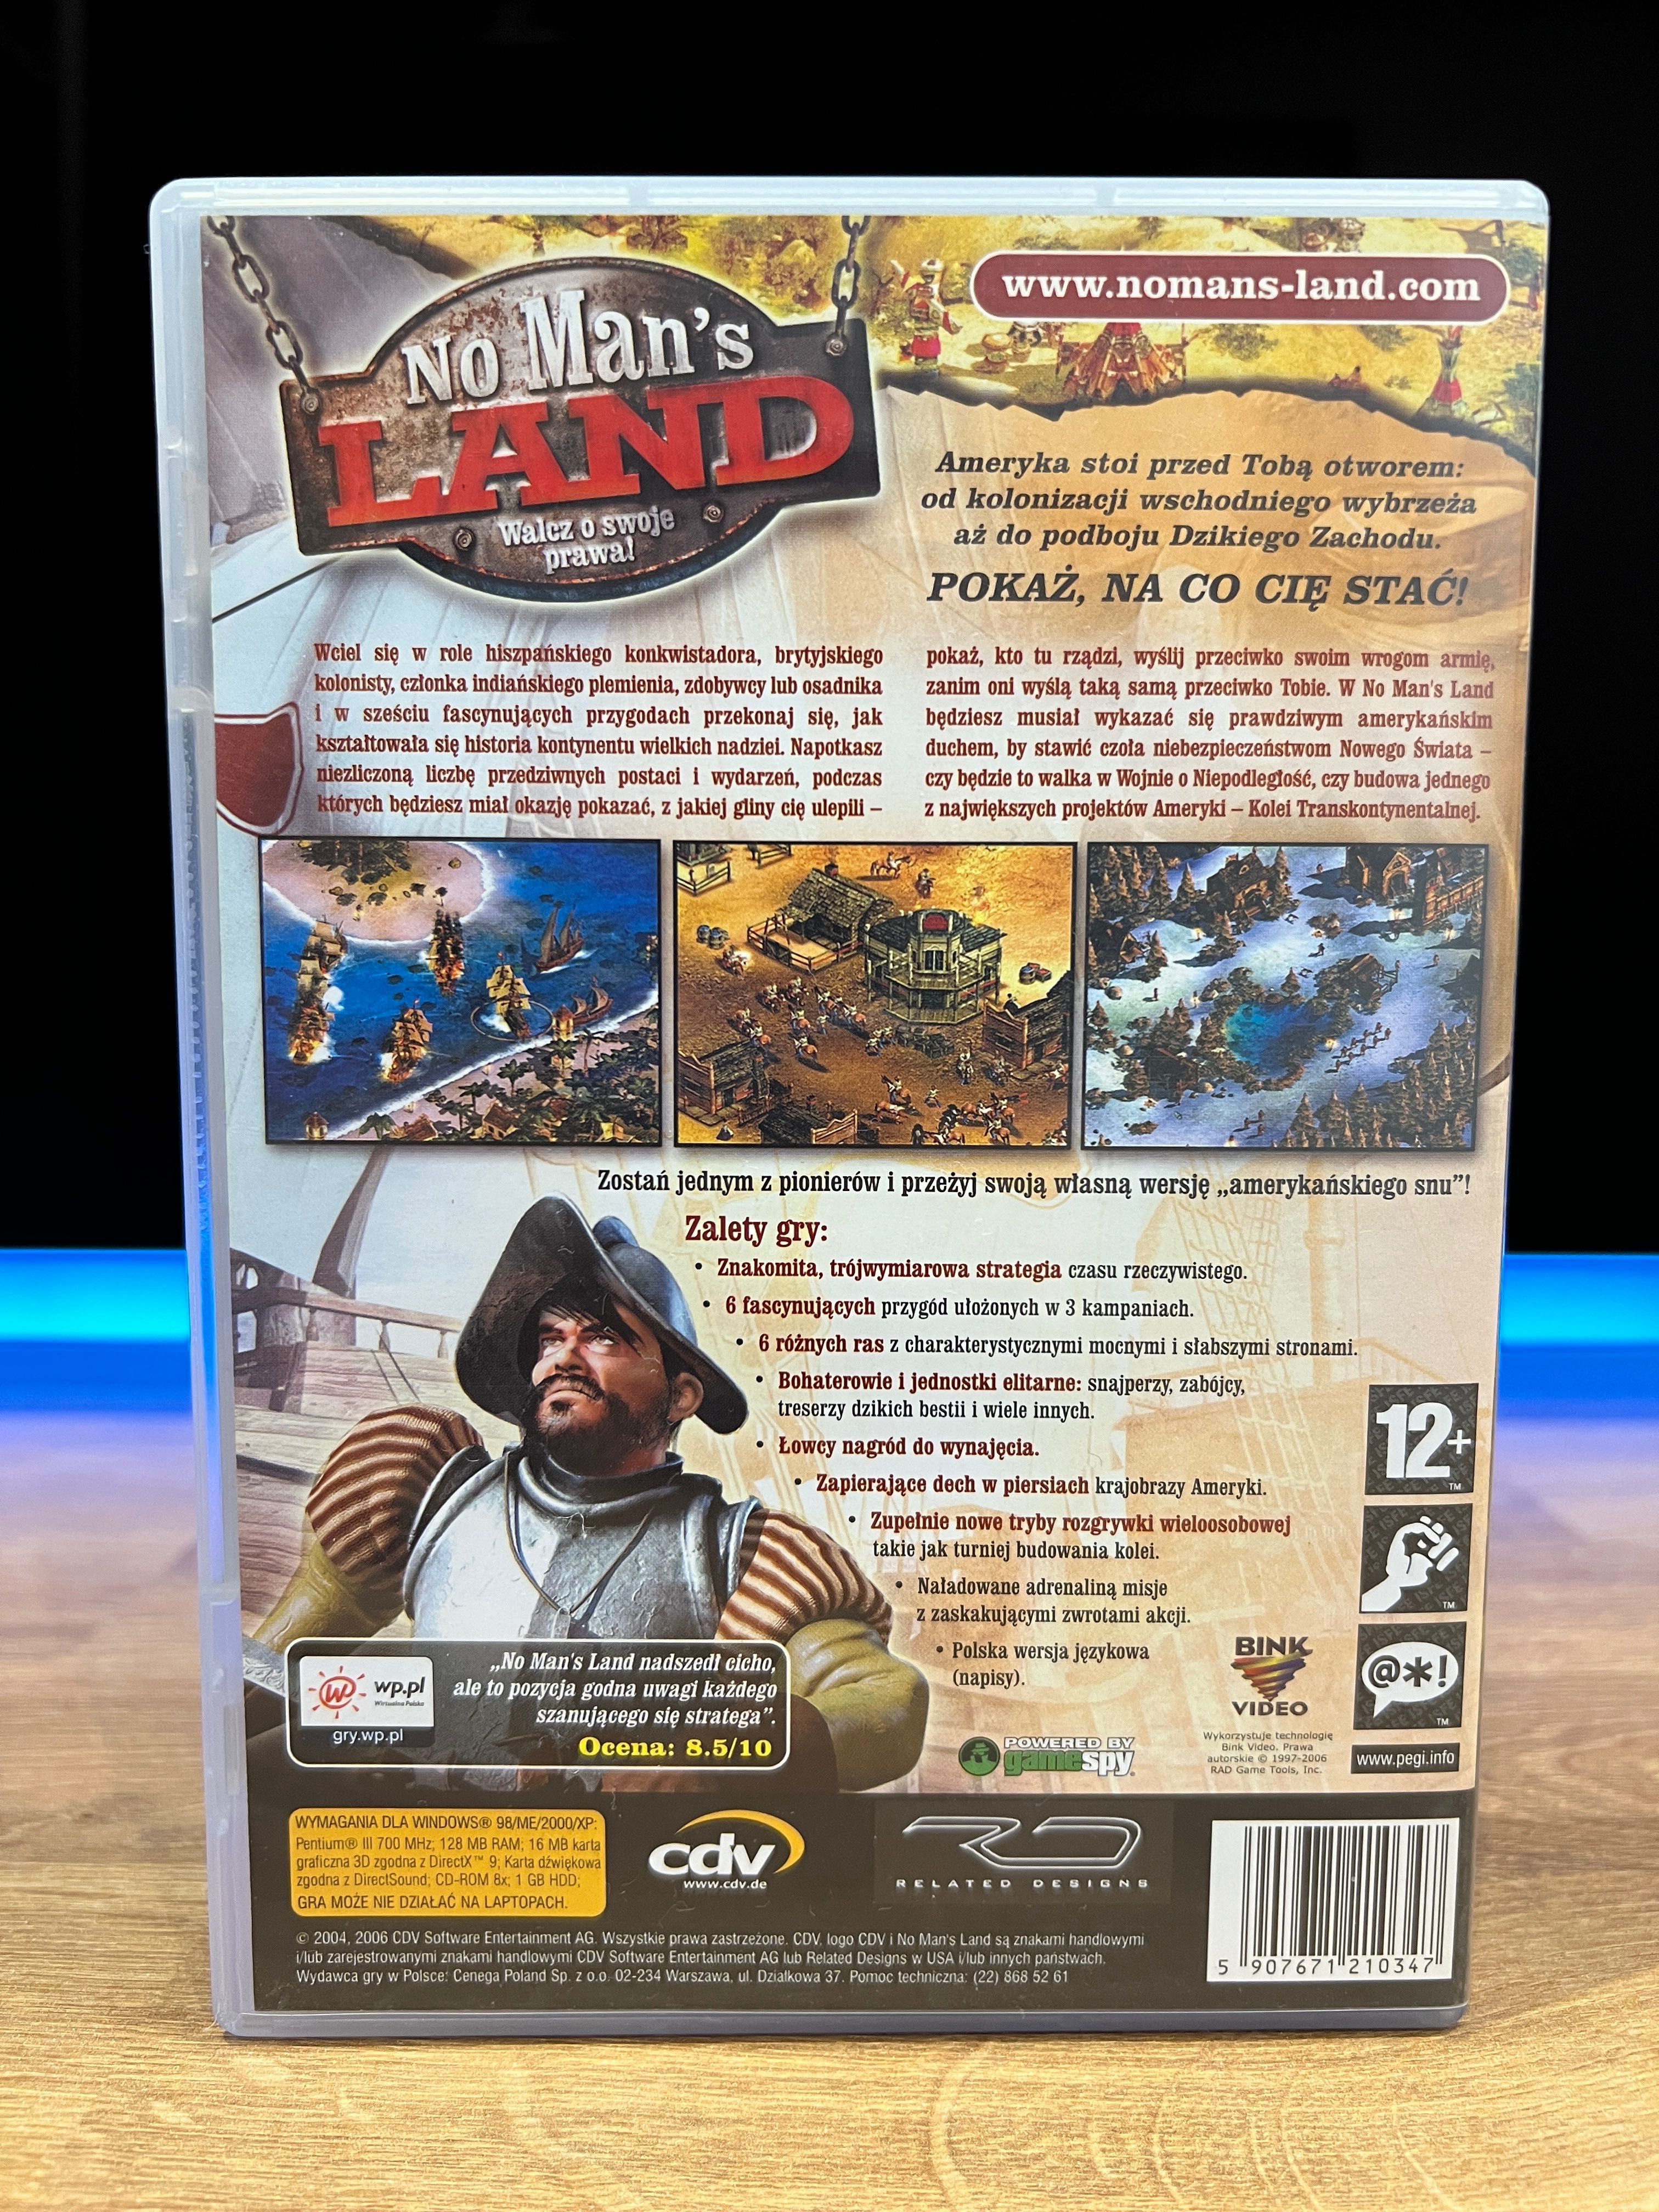 No Man’s Land gra (PC PL 2006) CD BOX kompletne wydanie